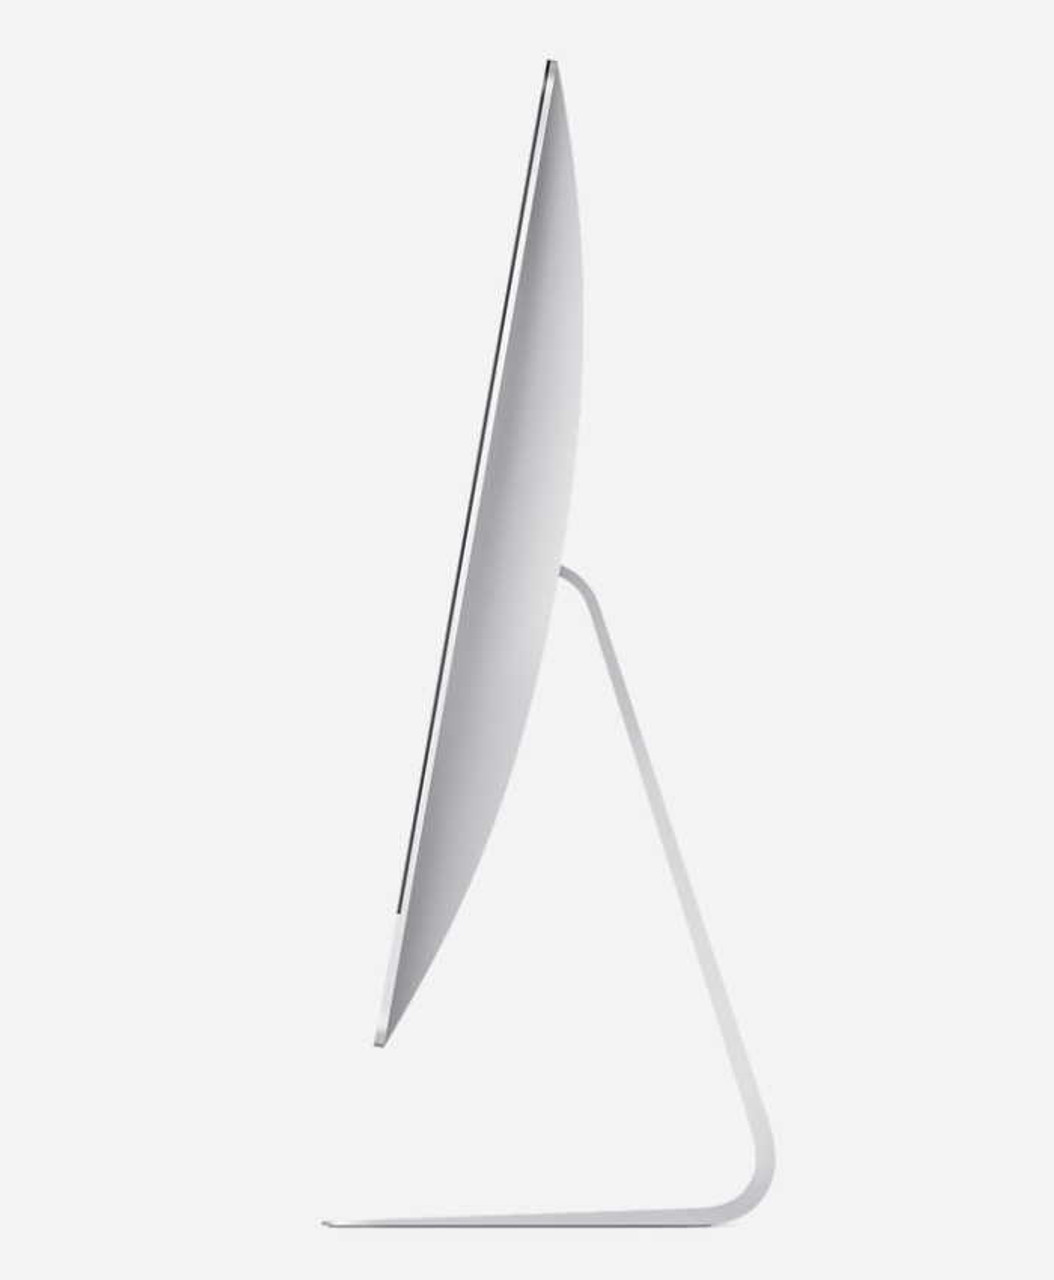 iMac 27-inch (Retina 5K) 3.1GHZ 6-Core i5 (2020). - Apple MXWT2LL/A